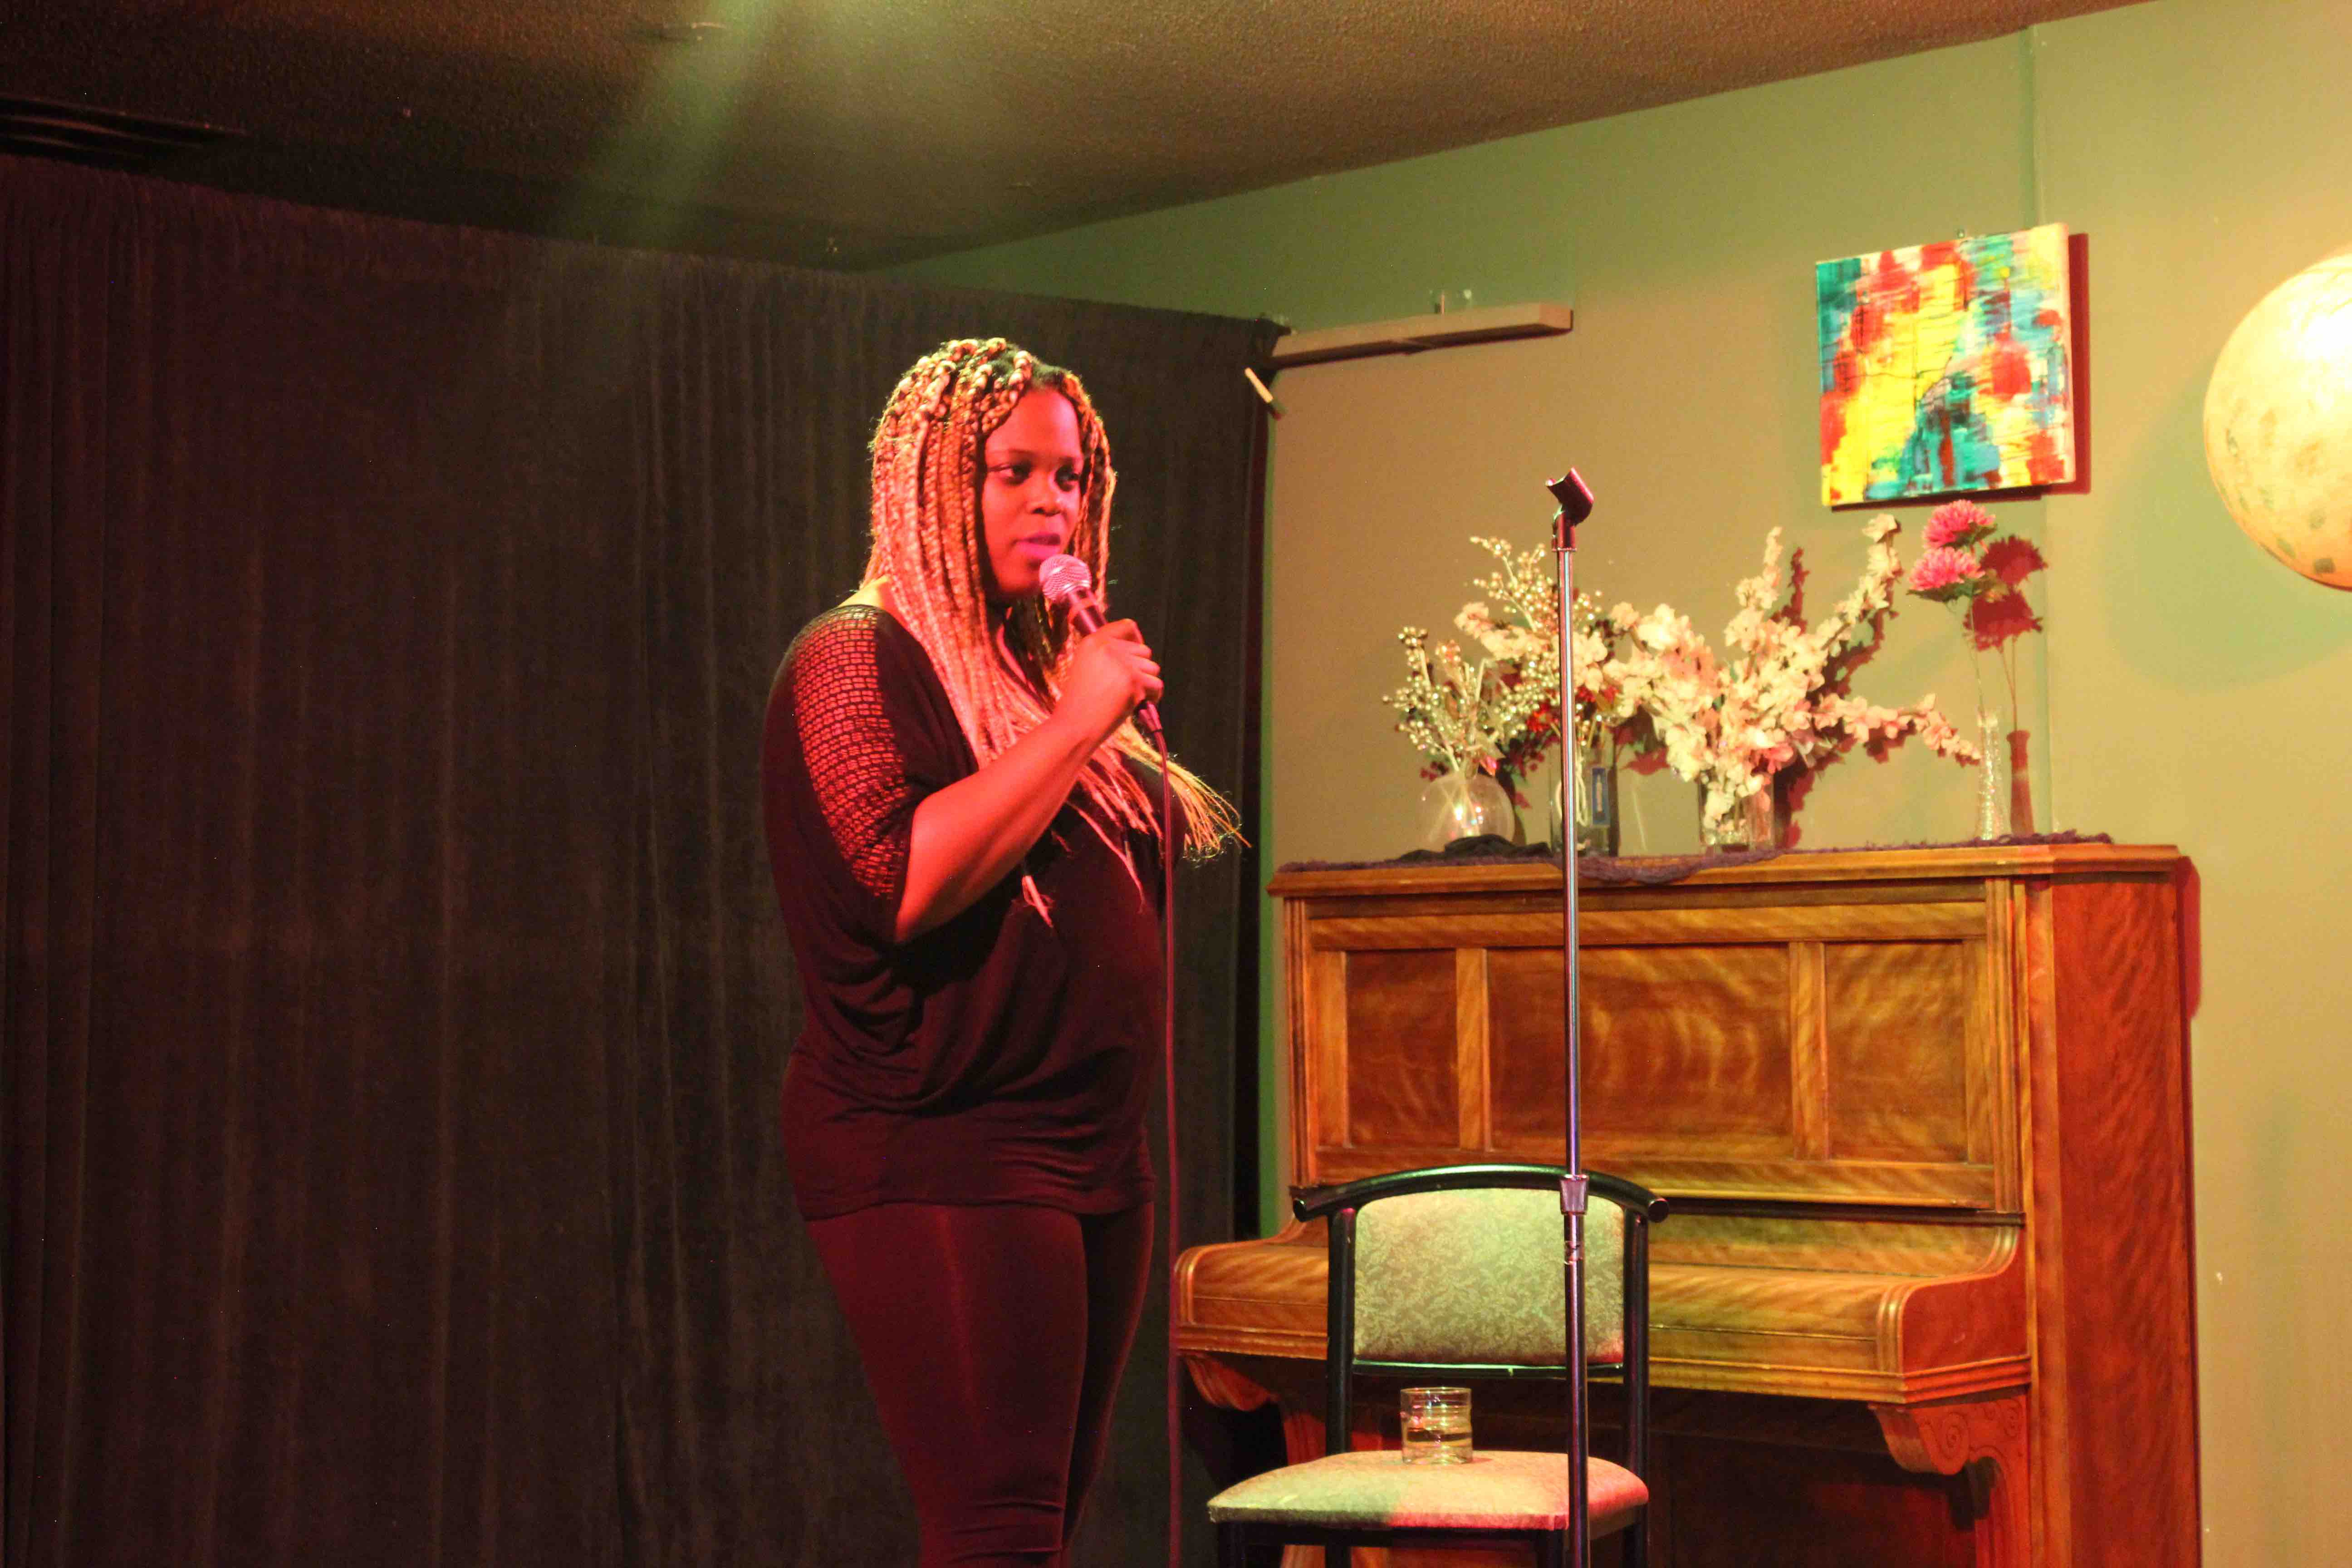 Tamara Shevon performing stand up comedy.